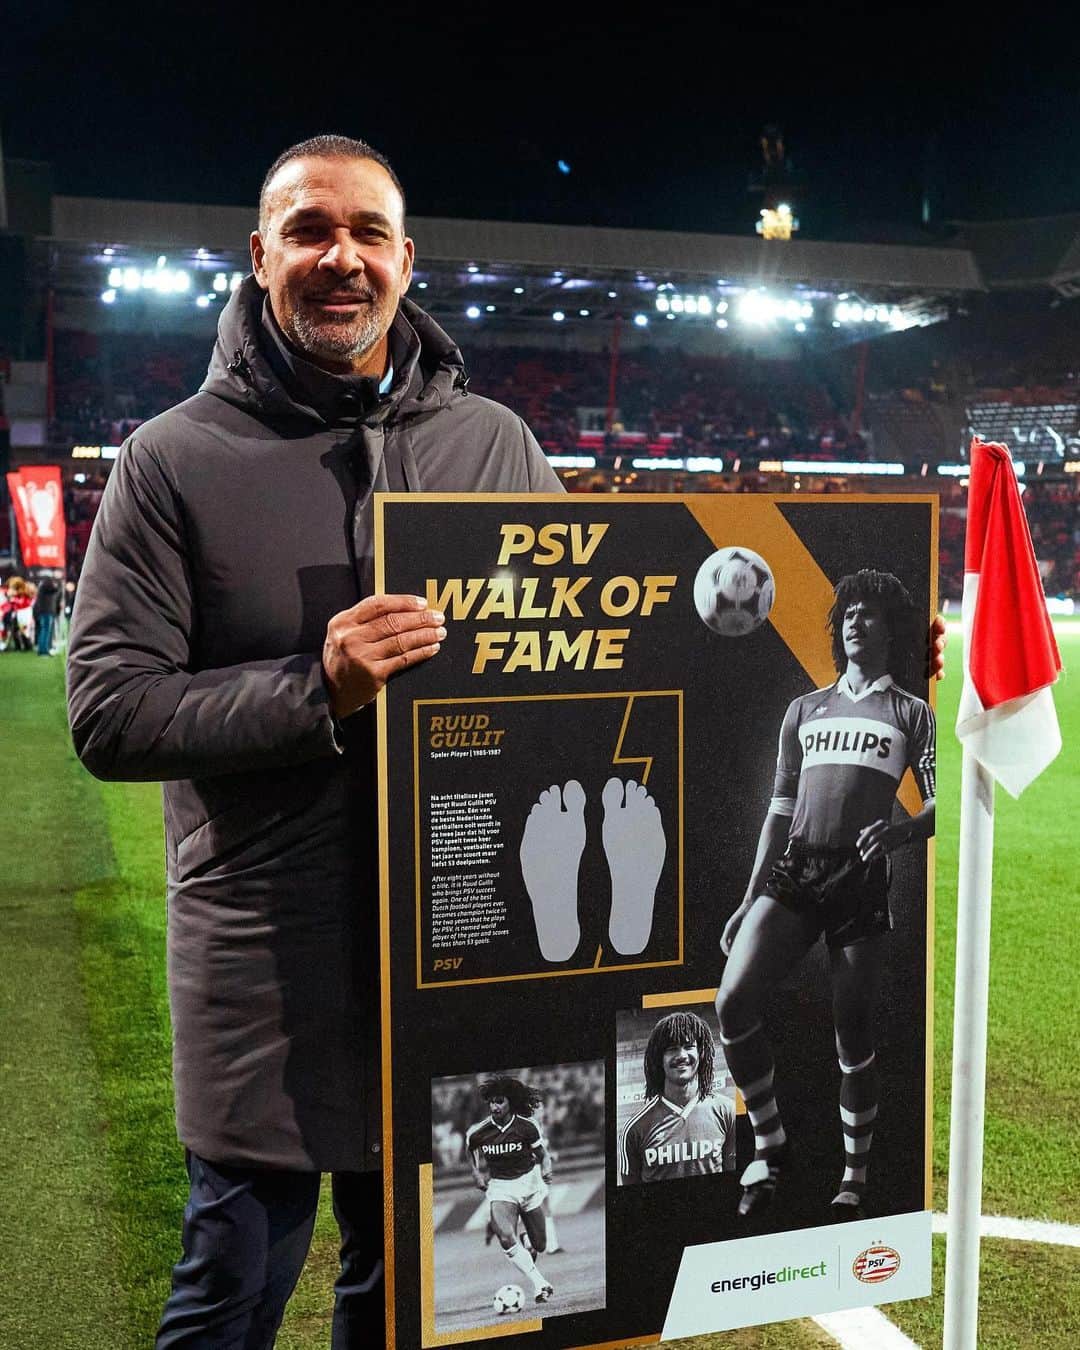 PSVアイントホーフェンのインスタグラム：「Welkom op de PSV Walk of Fame, Ruud Gullit ⭐️」